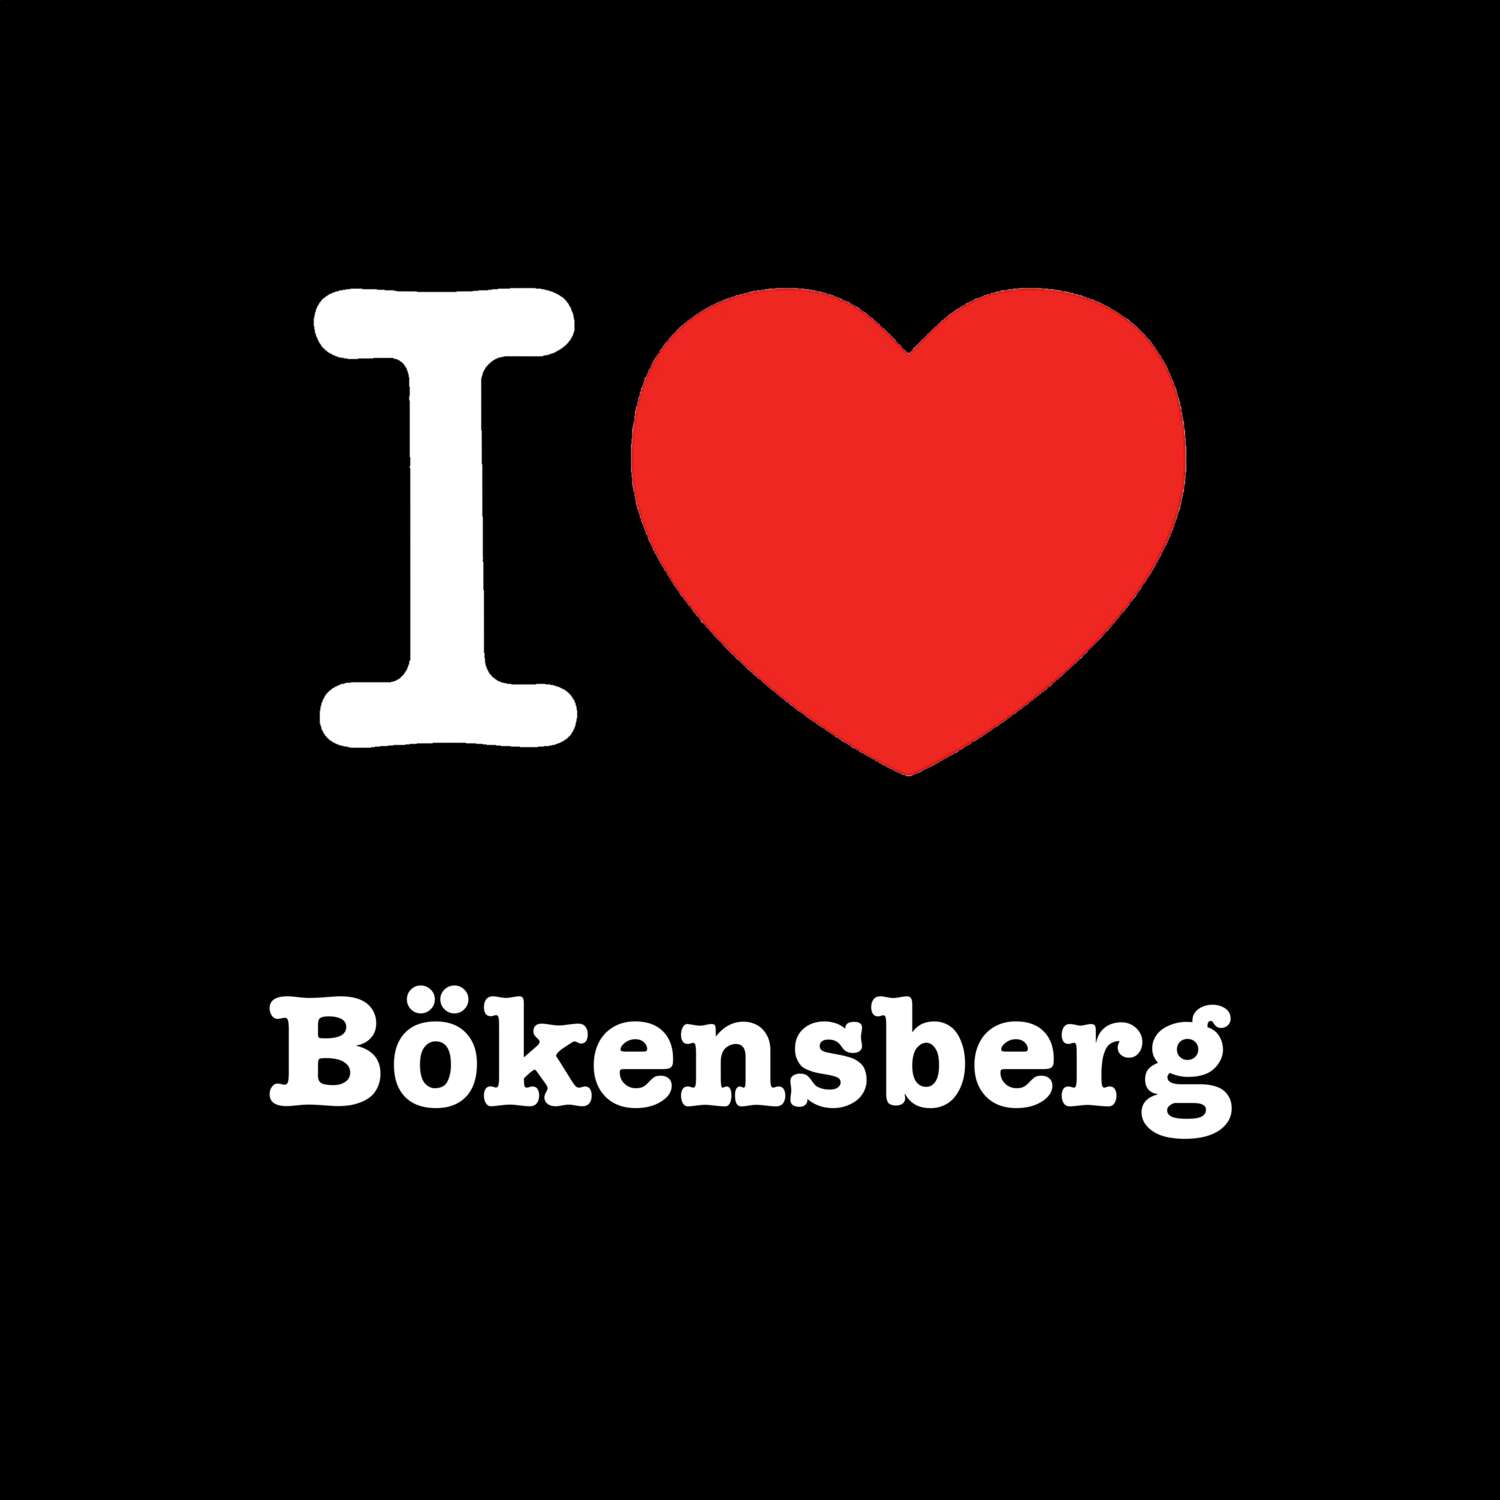 Bökensberg T-Shirt »I love«